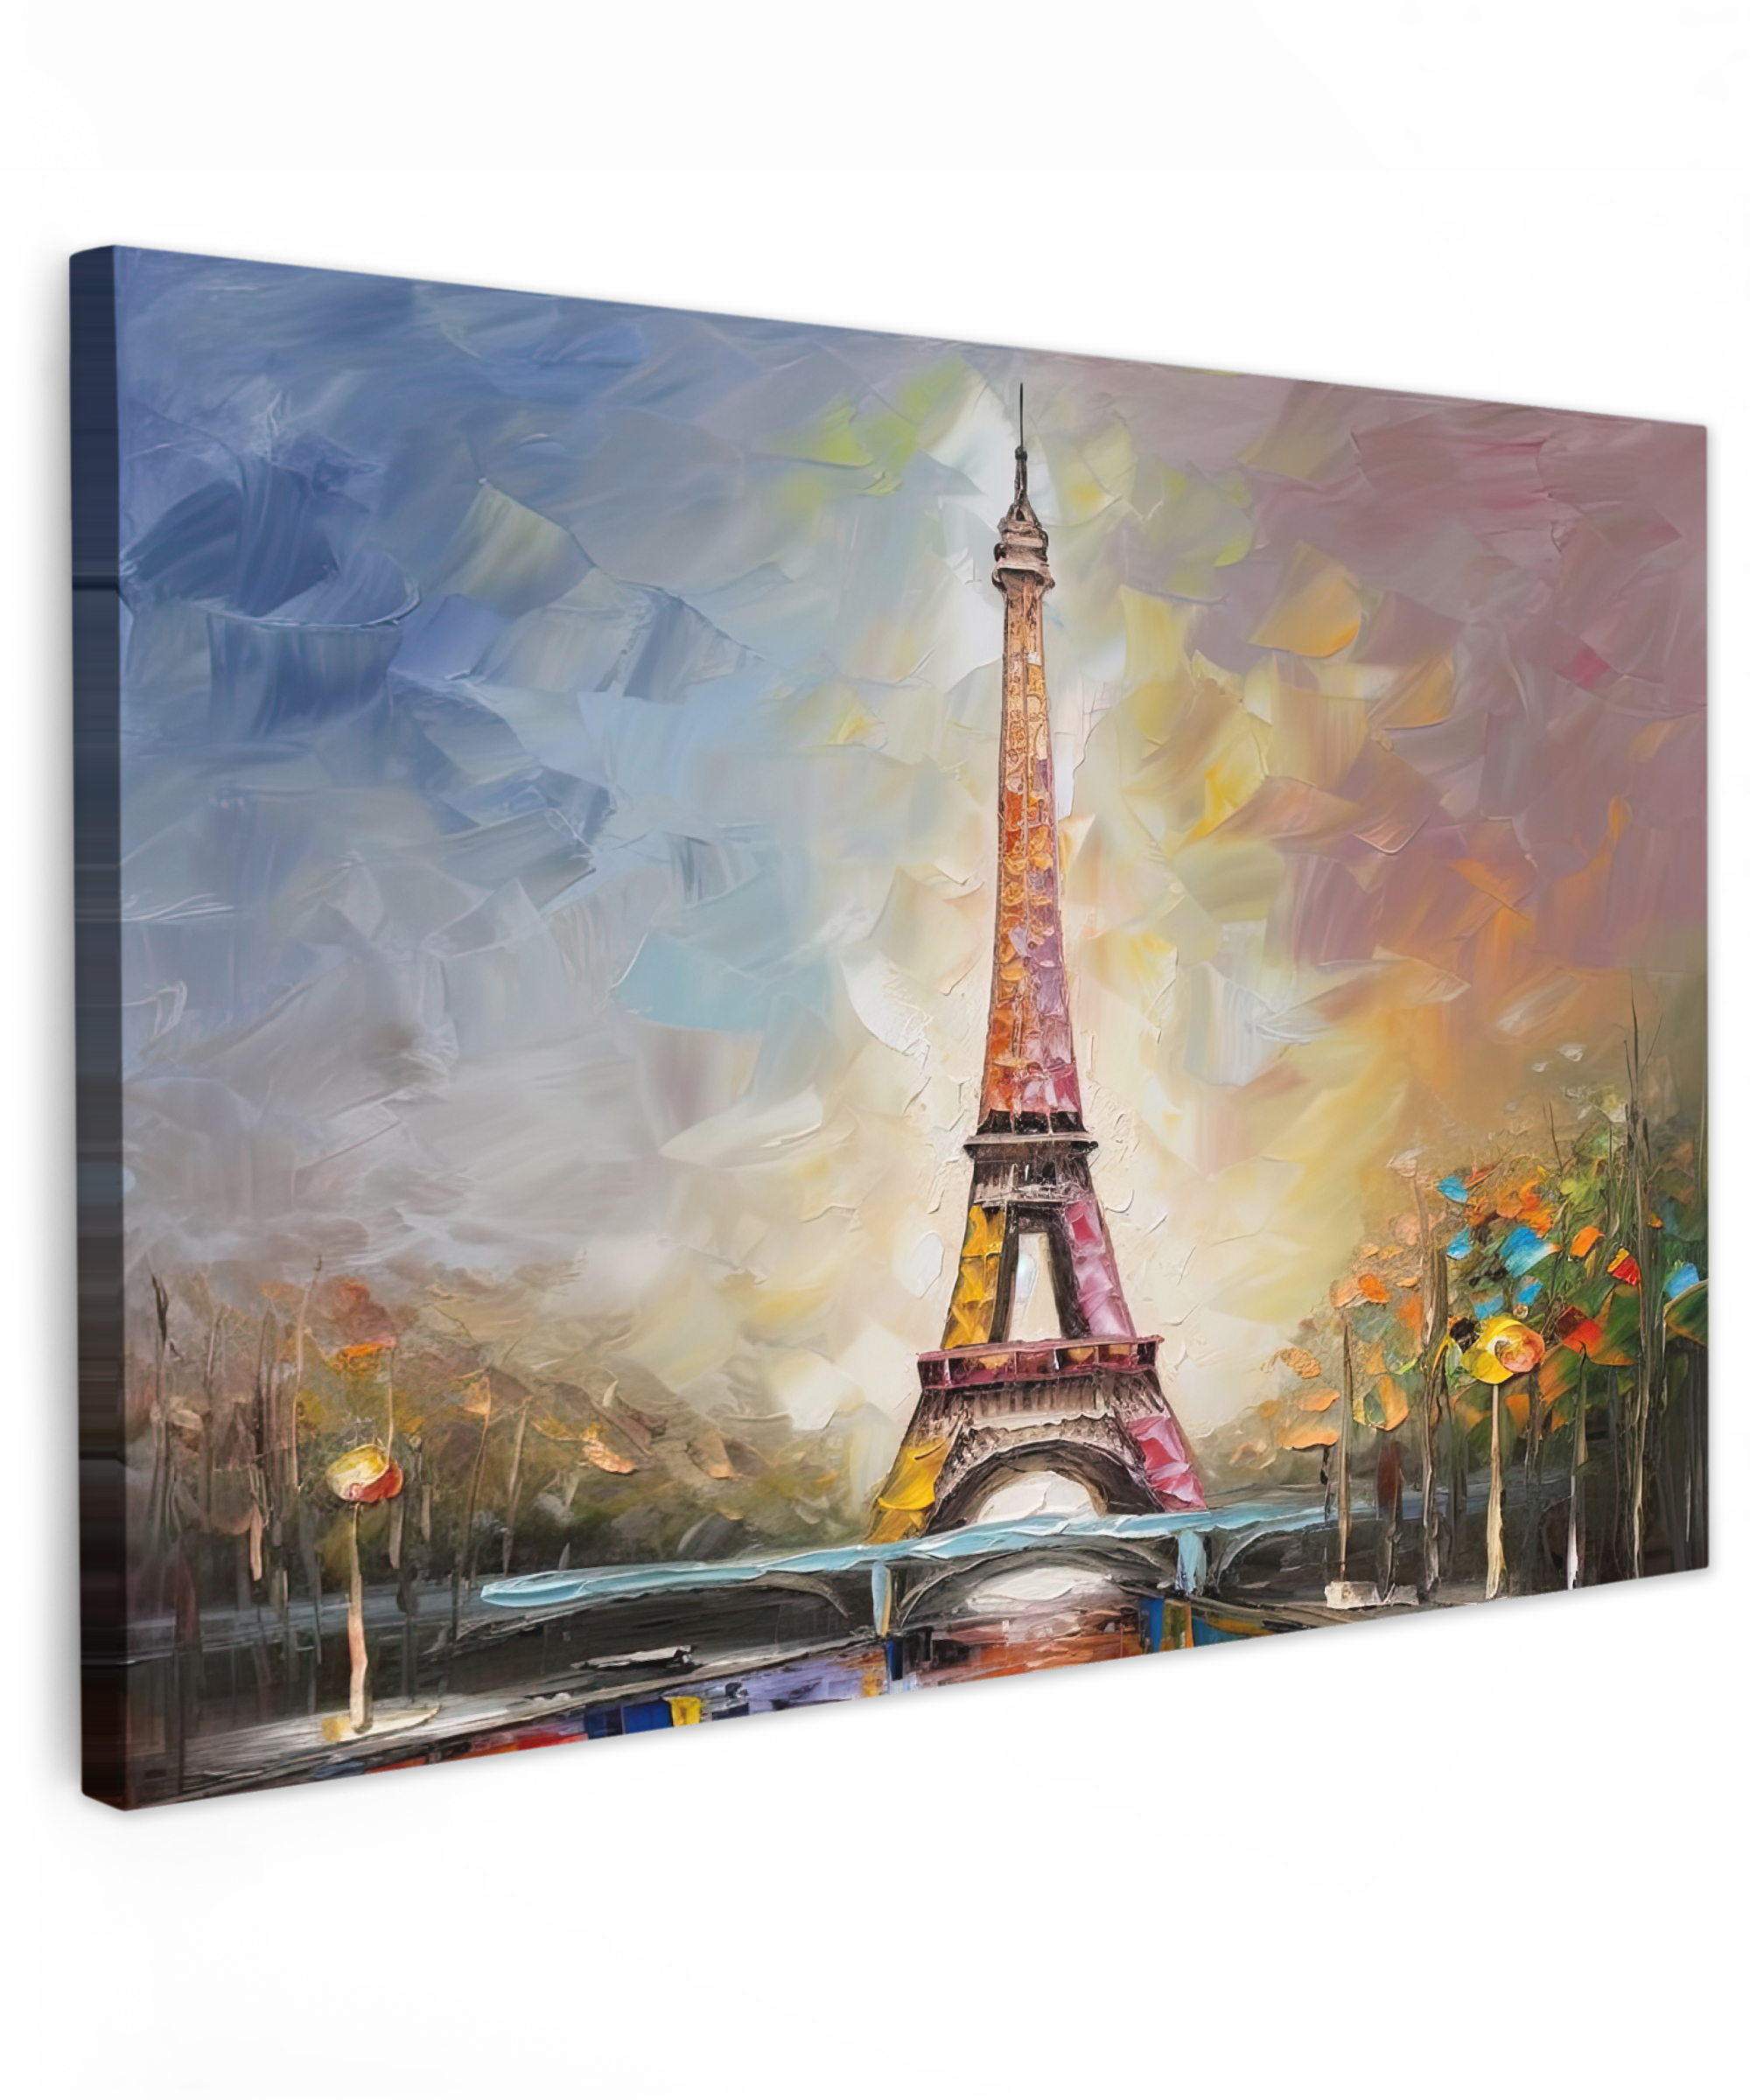 Leinwandbild - Eiffelturm - Gemälde - Ölgemälde - Paris